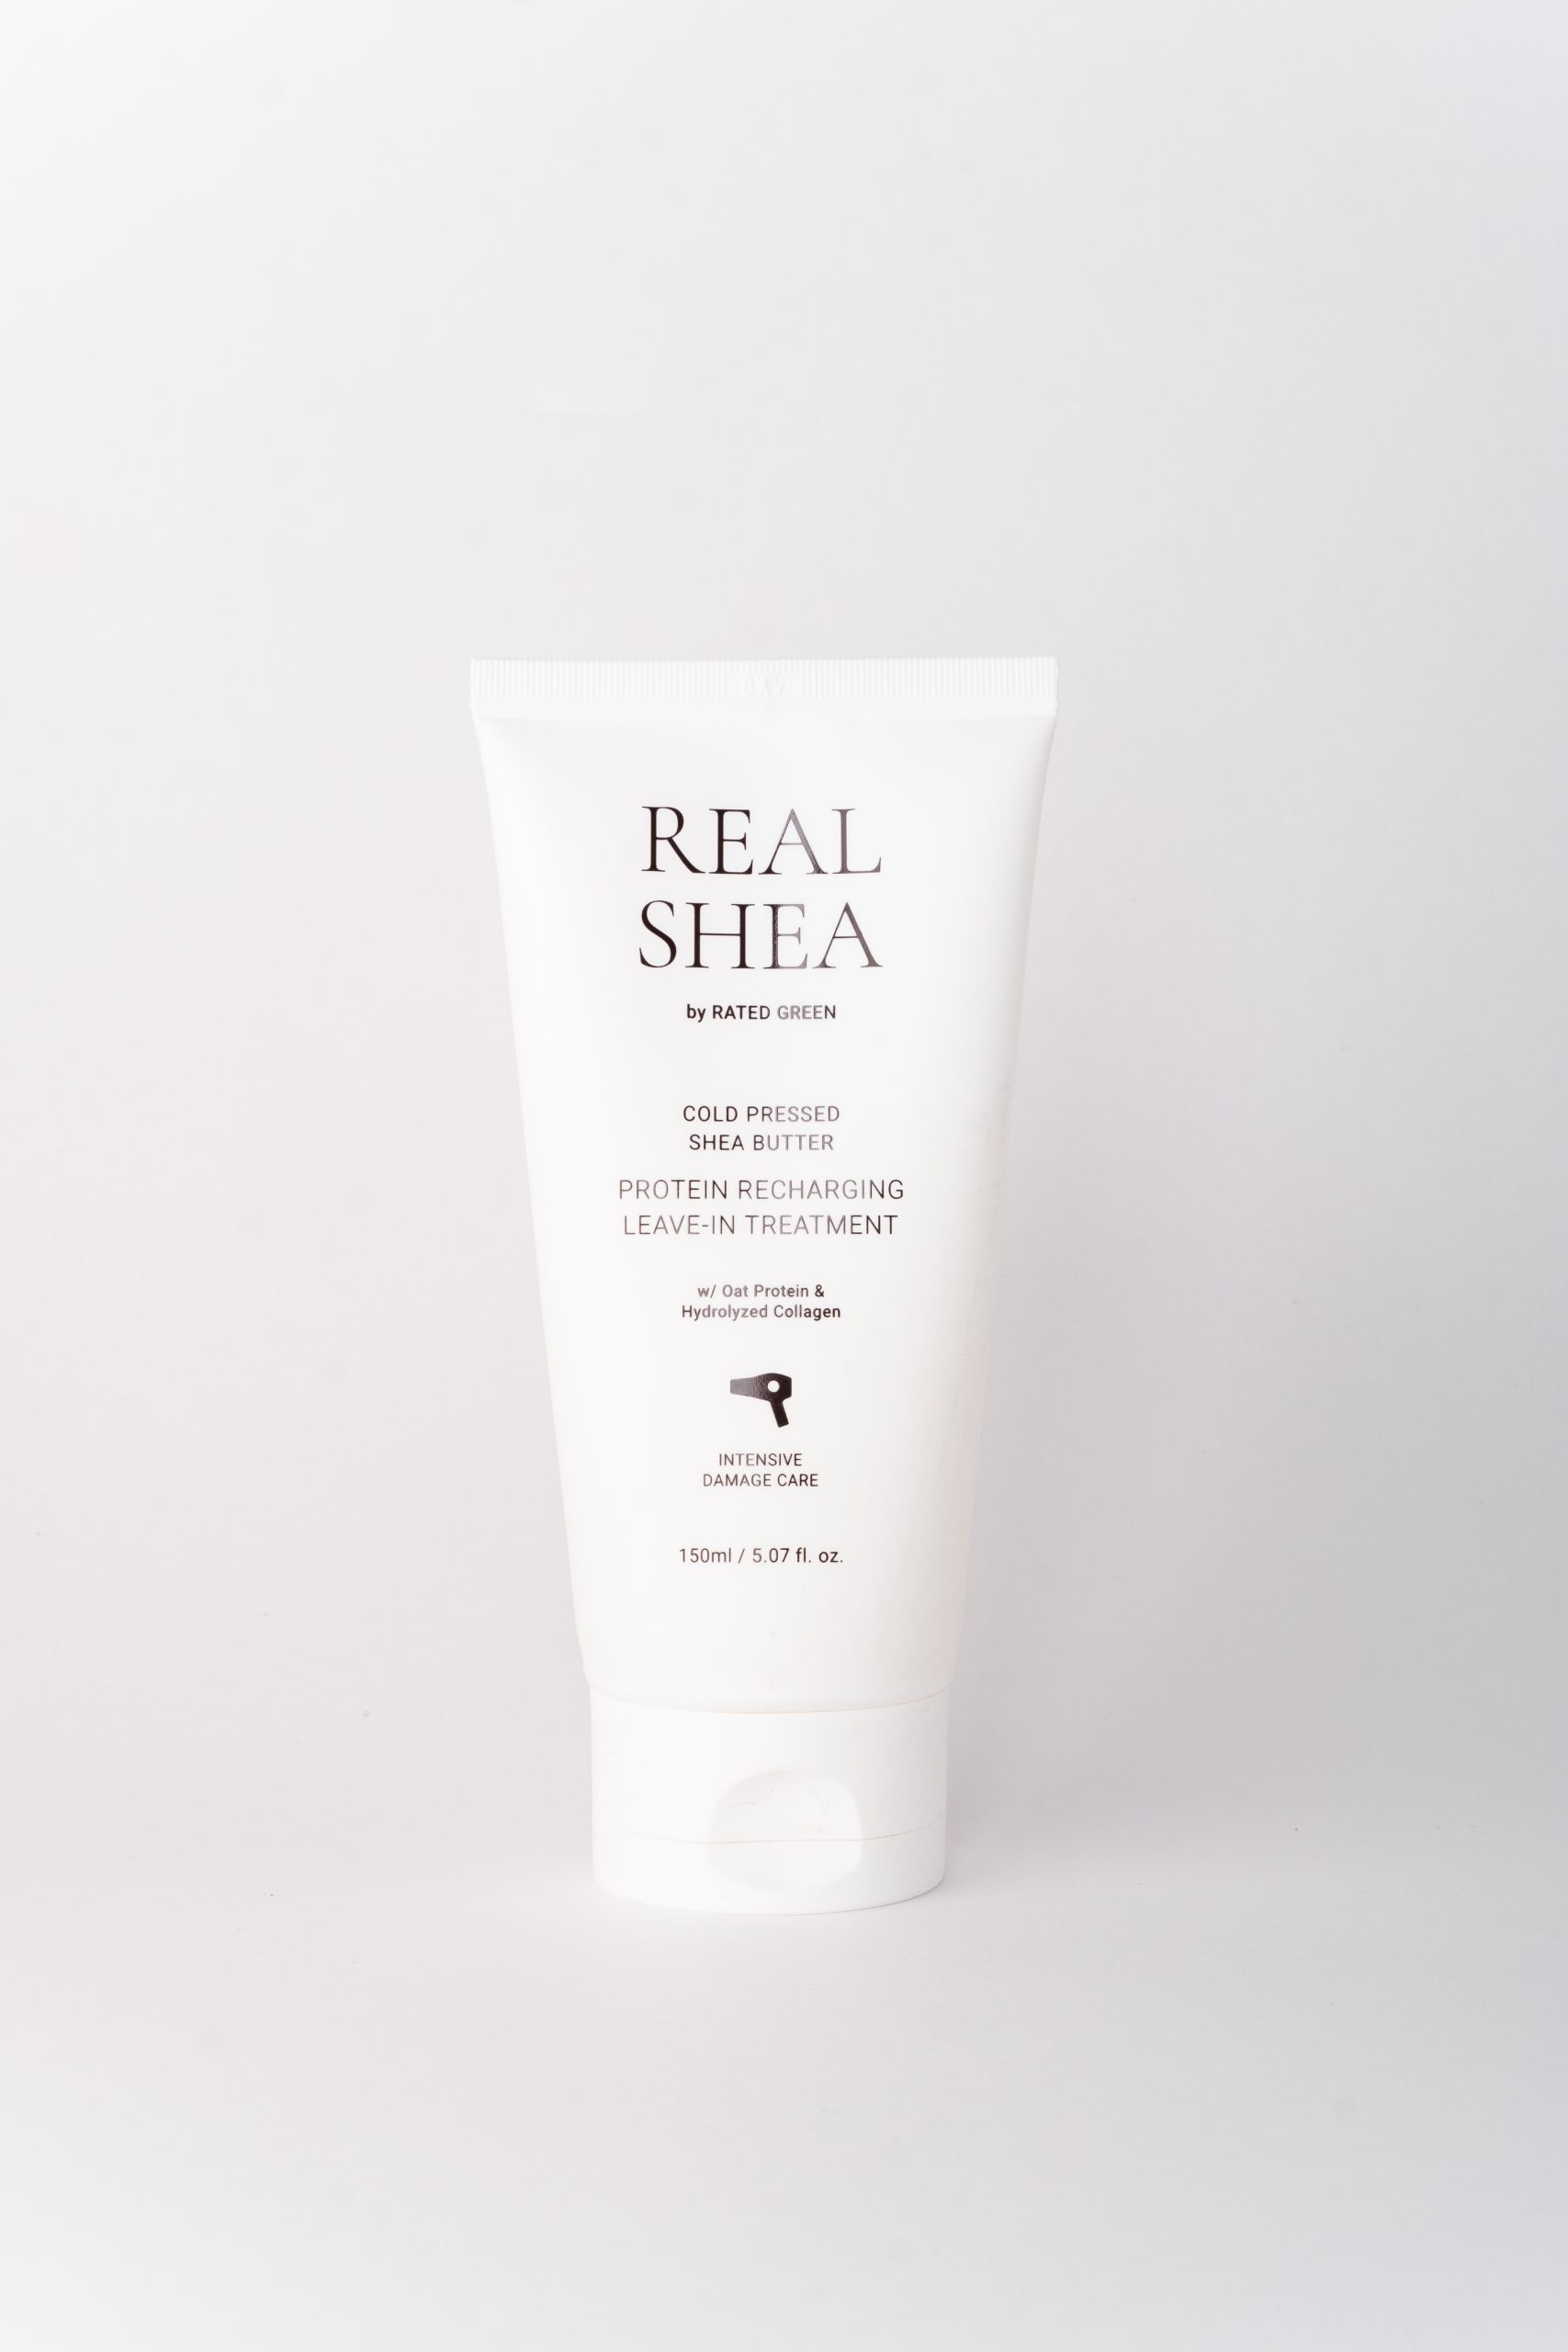 Rated Green крем для волос. Real Shea by rated Green термозащита. Шампунь mochiki Mask ши. Real Shea change treatment отзывы.